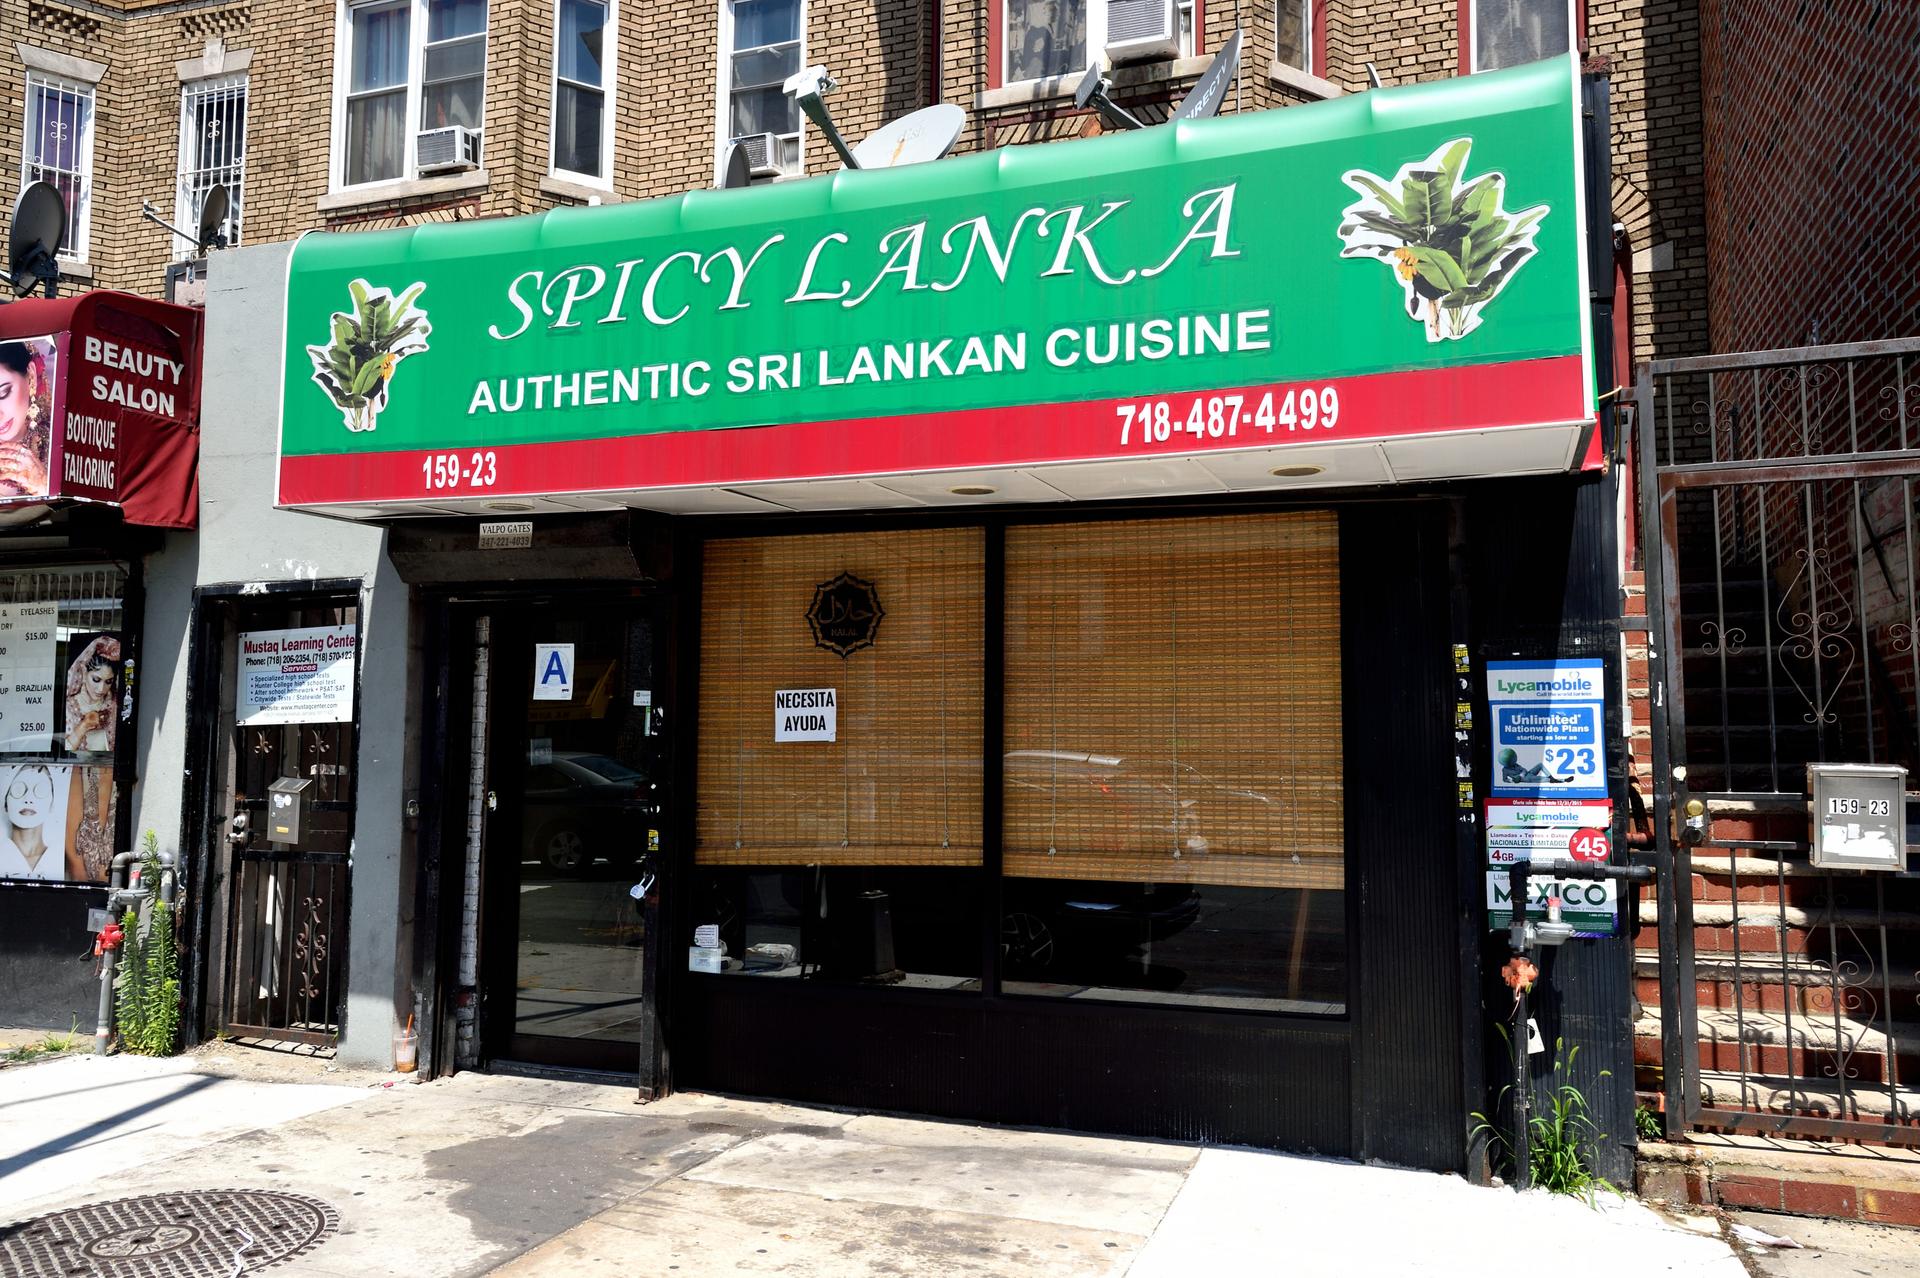 Spicy Lanka